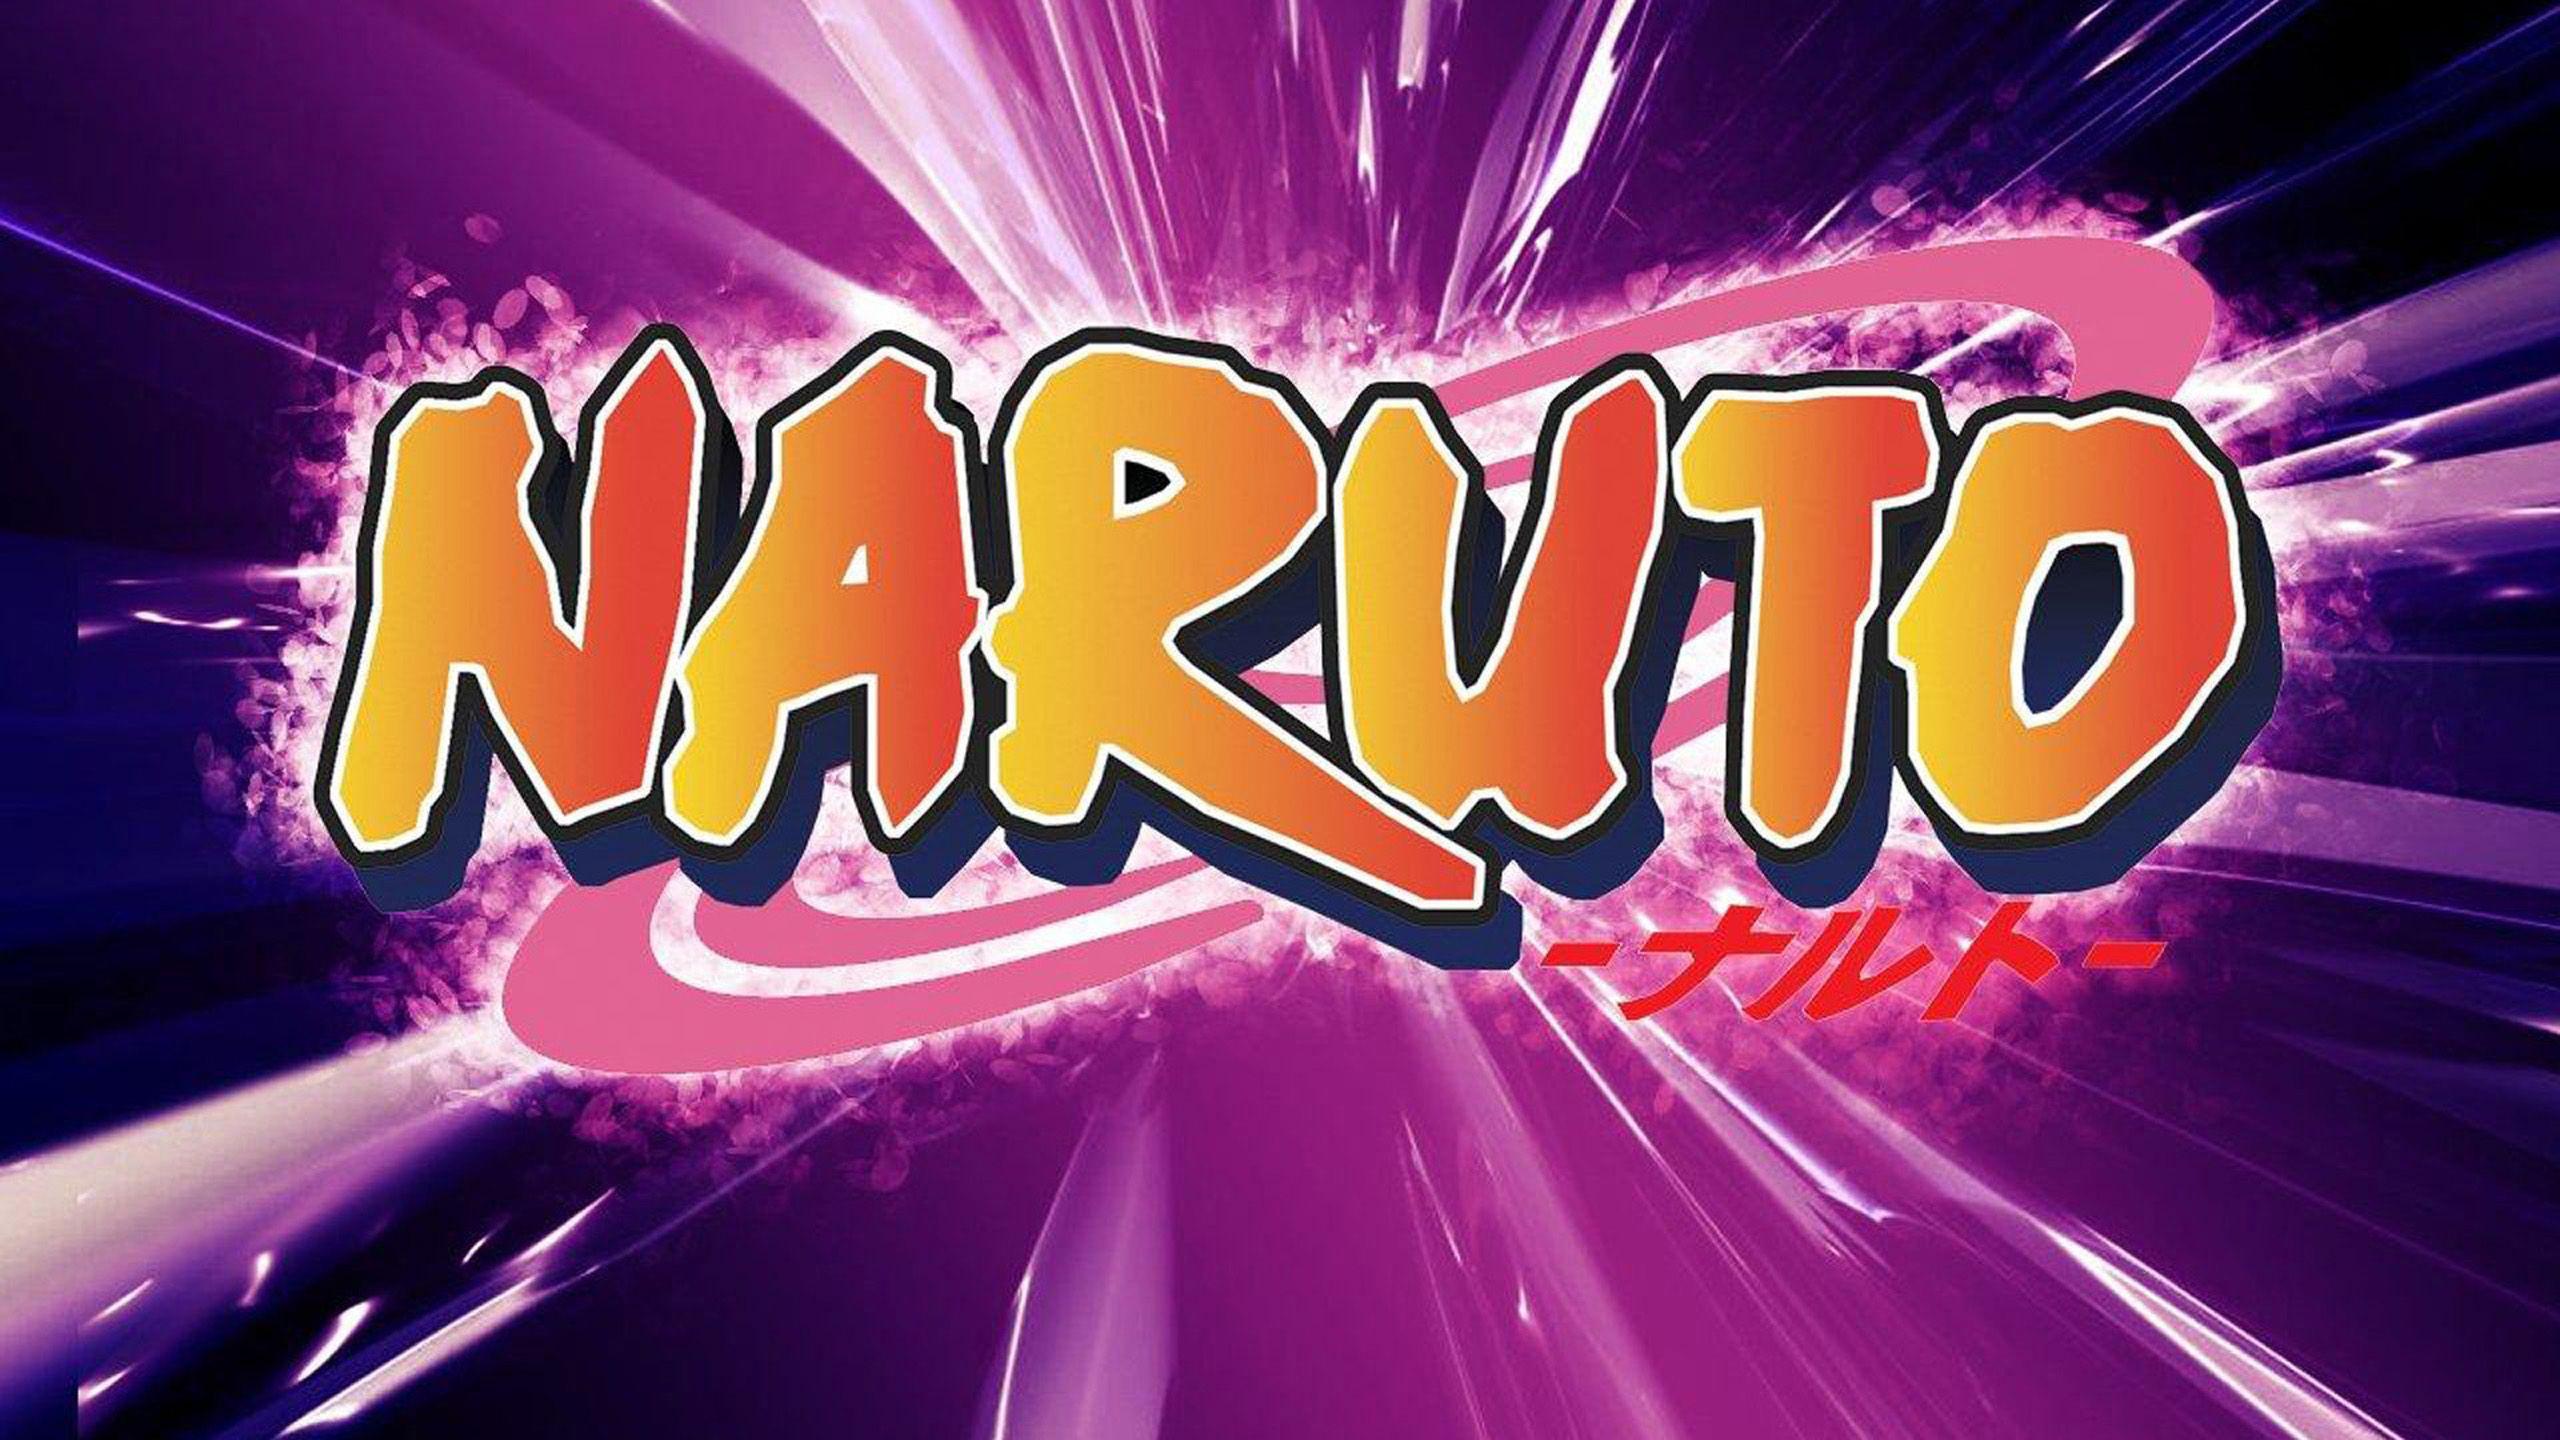 Naruto logo wallpaper HD Desktop Wallpaper